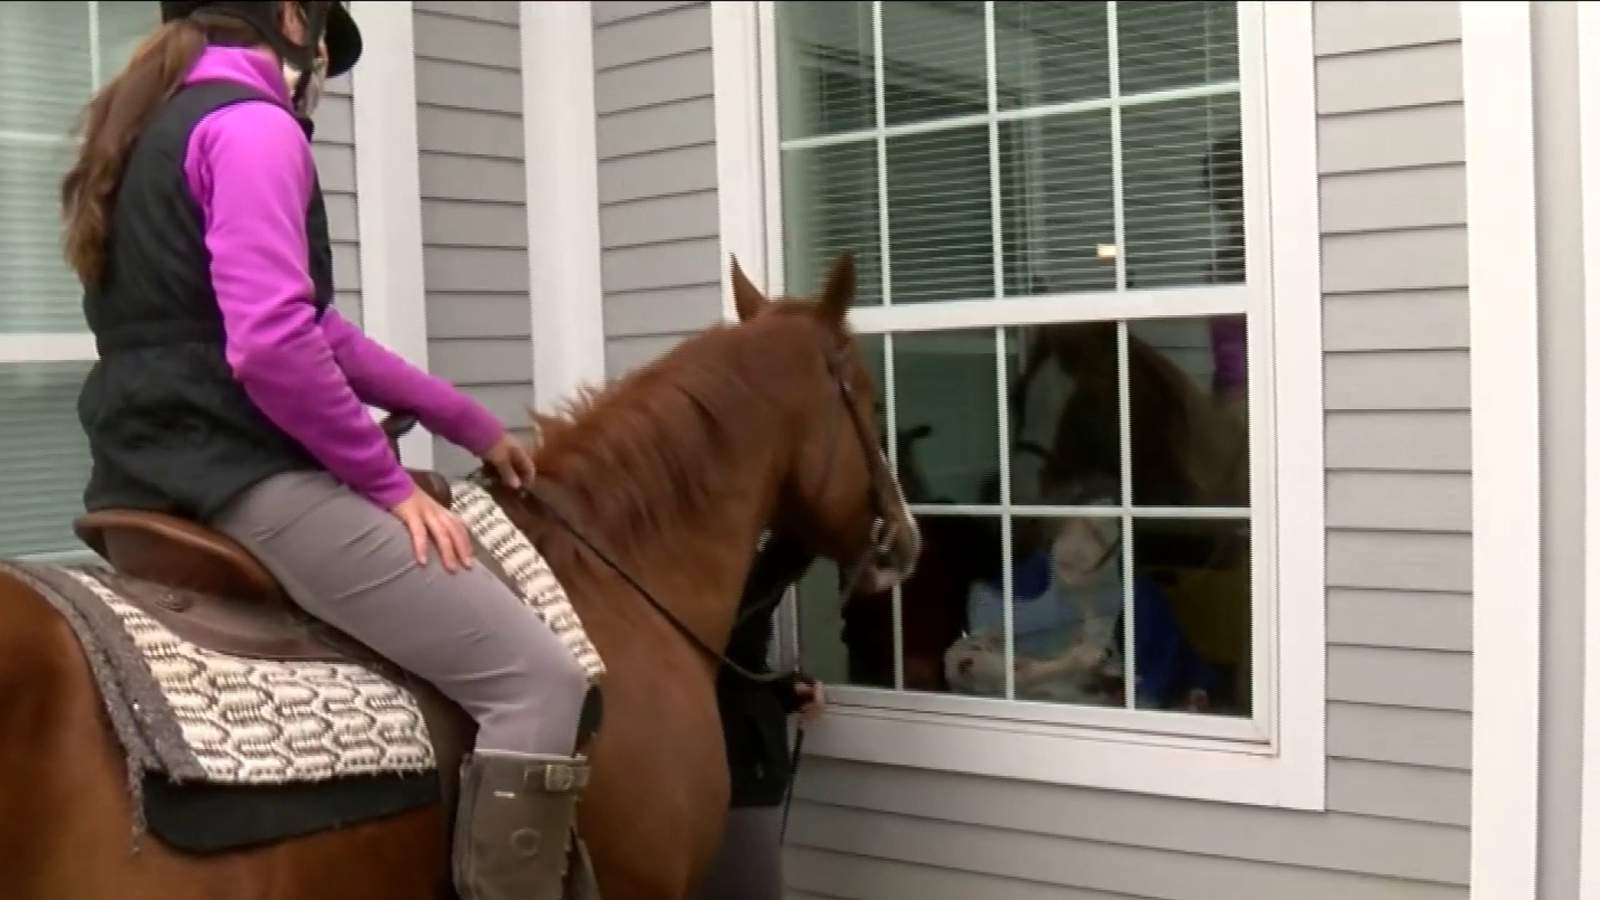 Horses visit Roanoke nursing home to cheer up residents